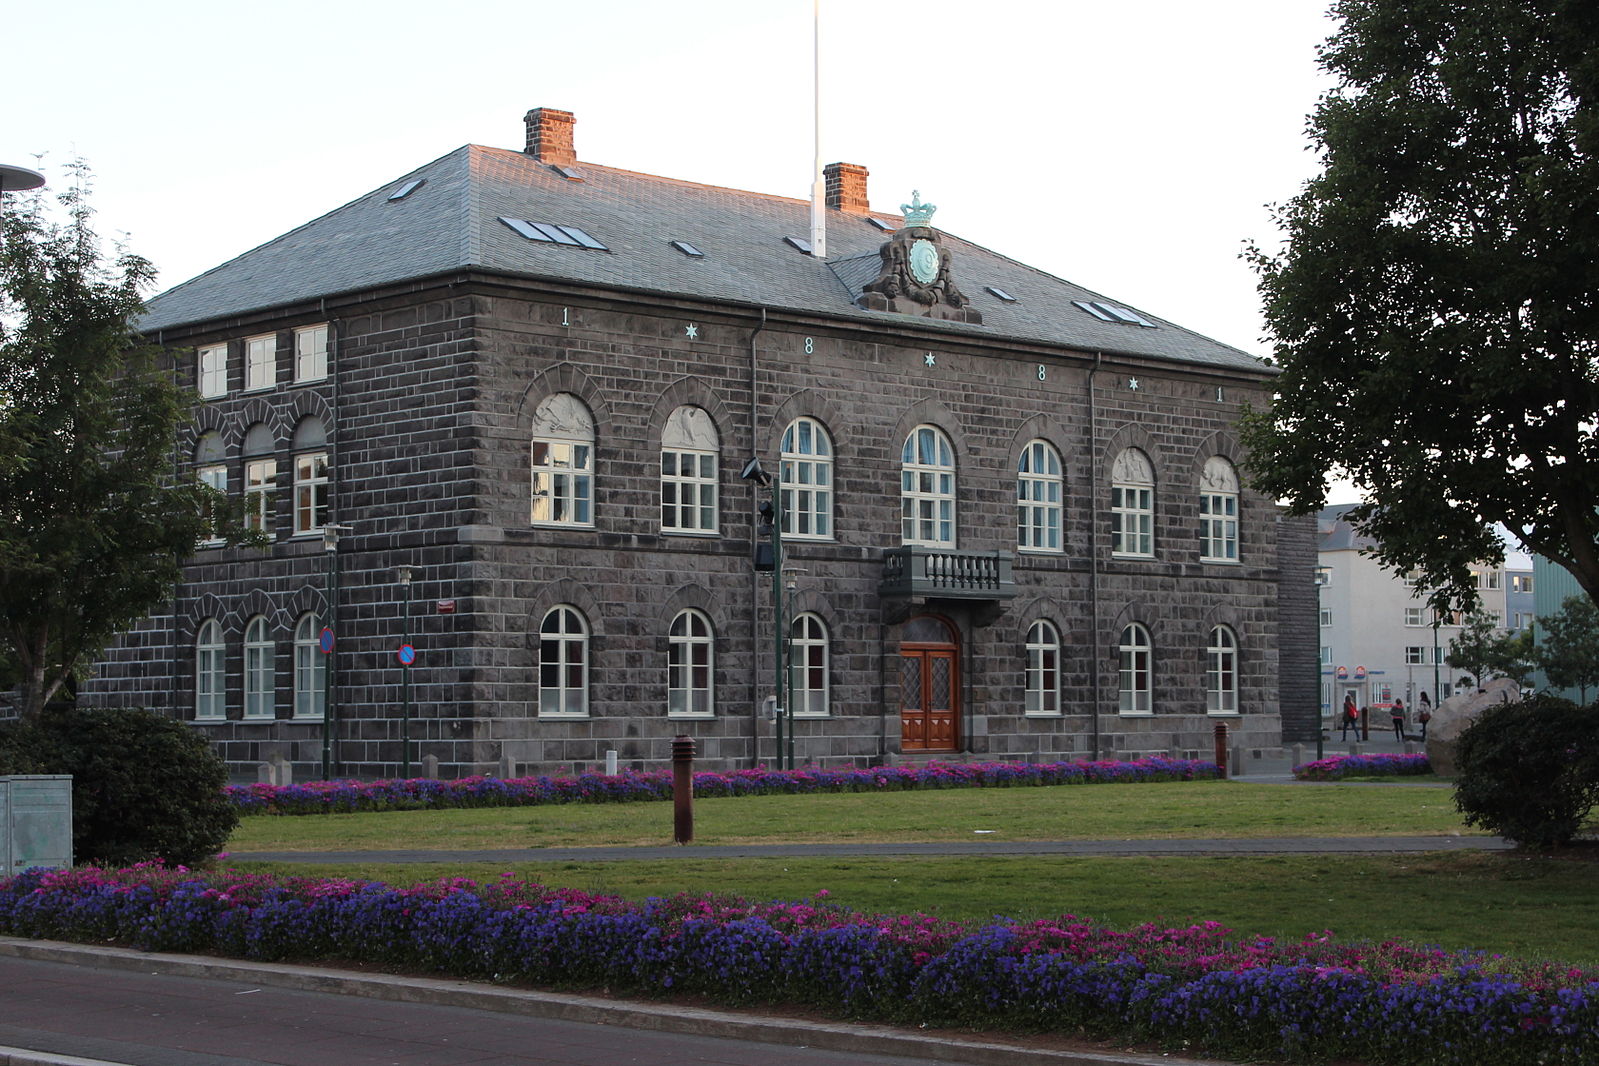 The Alþingi is located in Reykjavík.